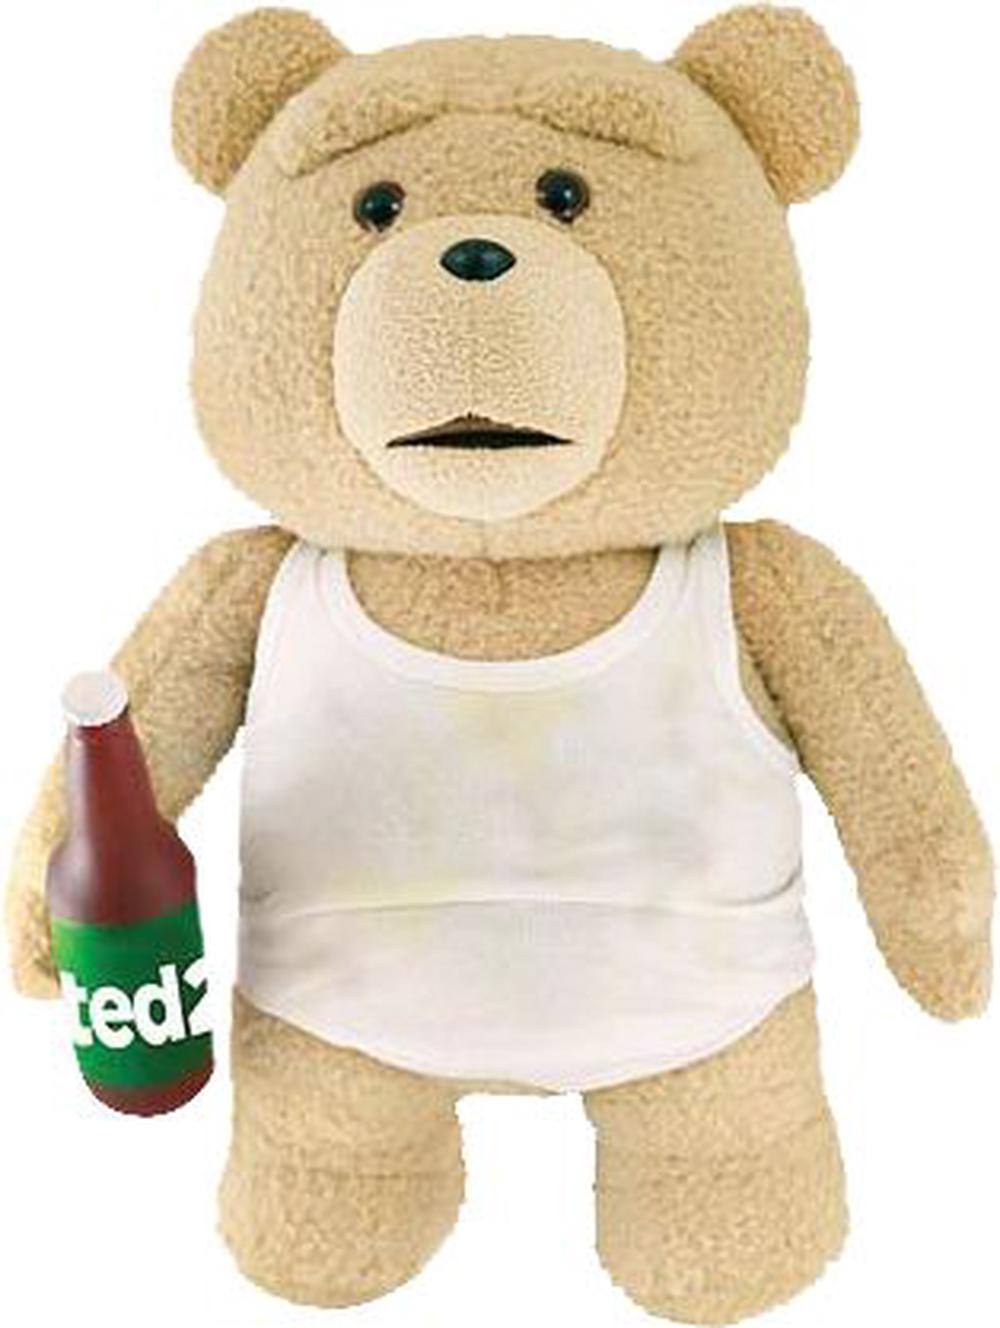 commonwealth toy company teddy bear